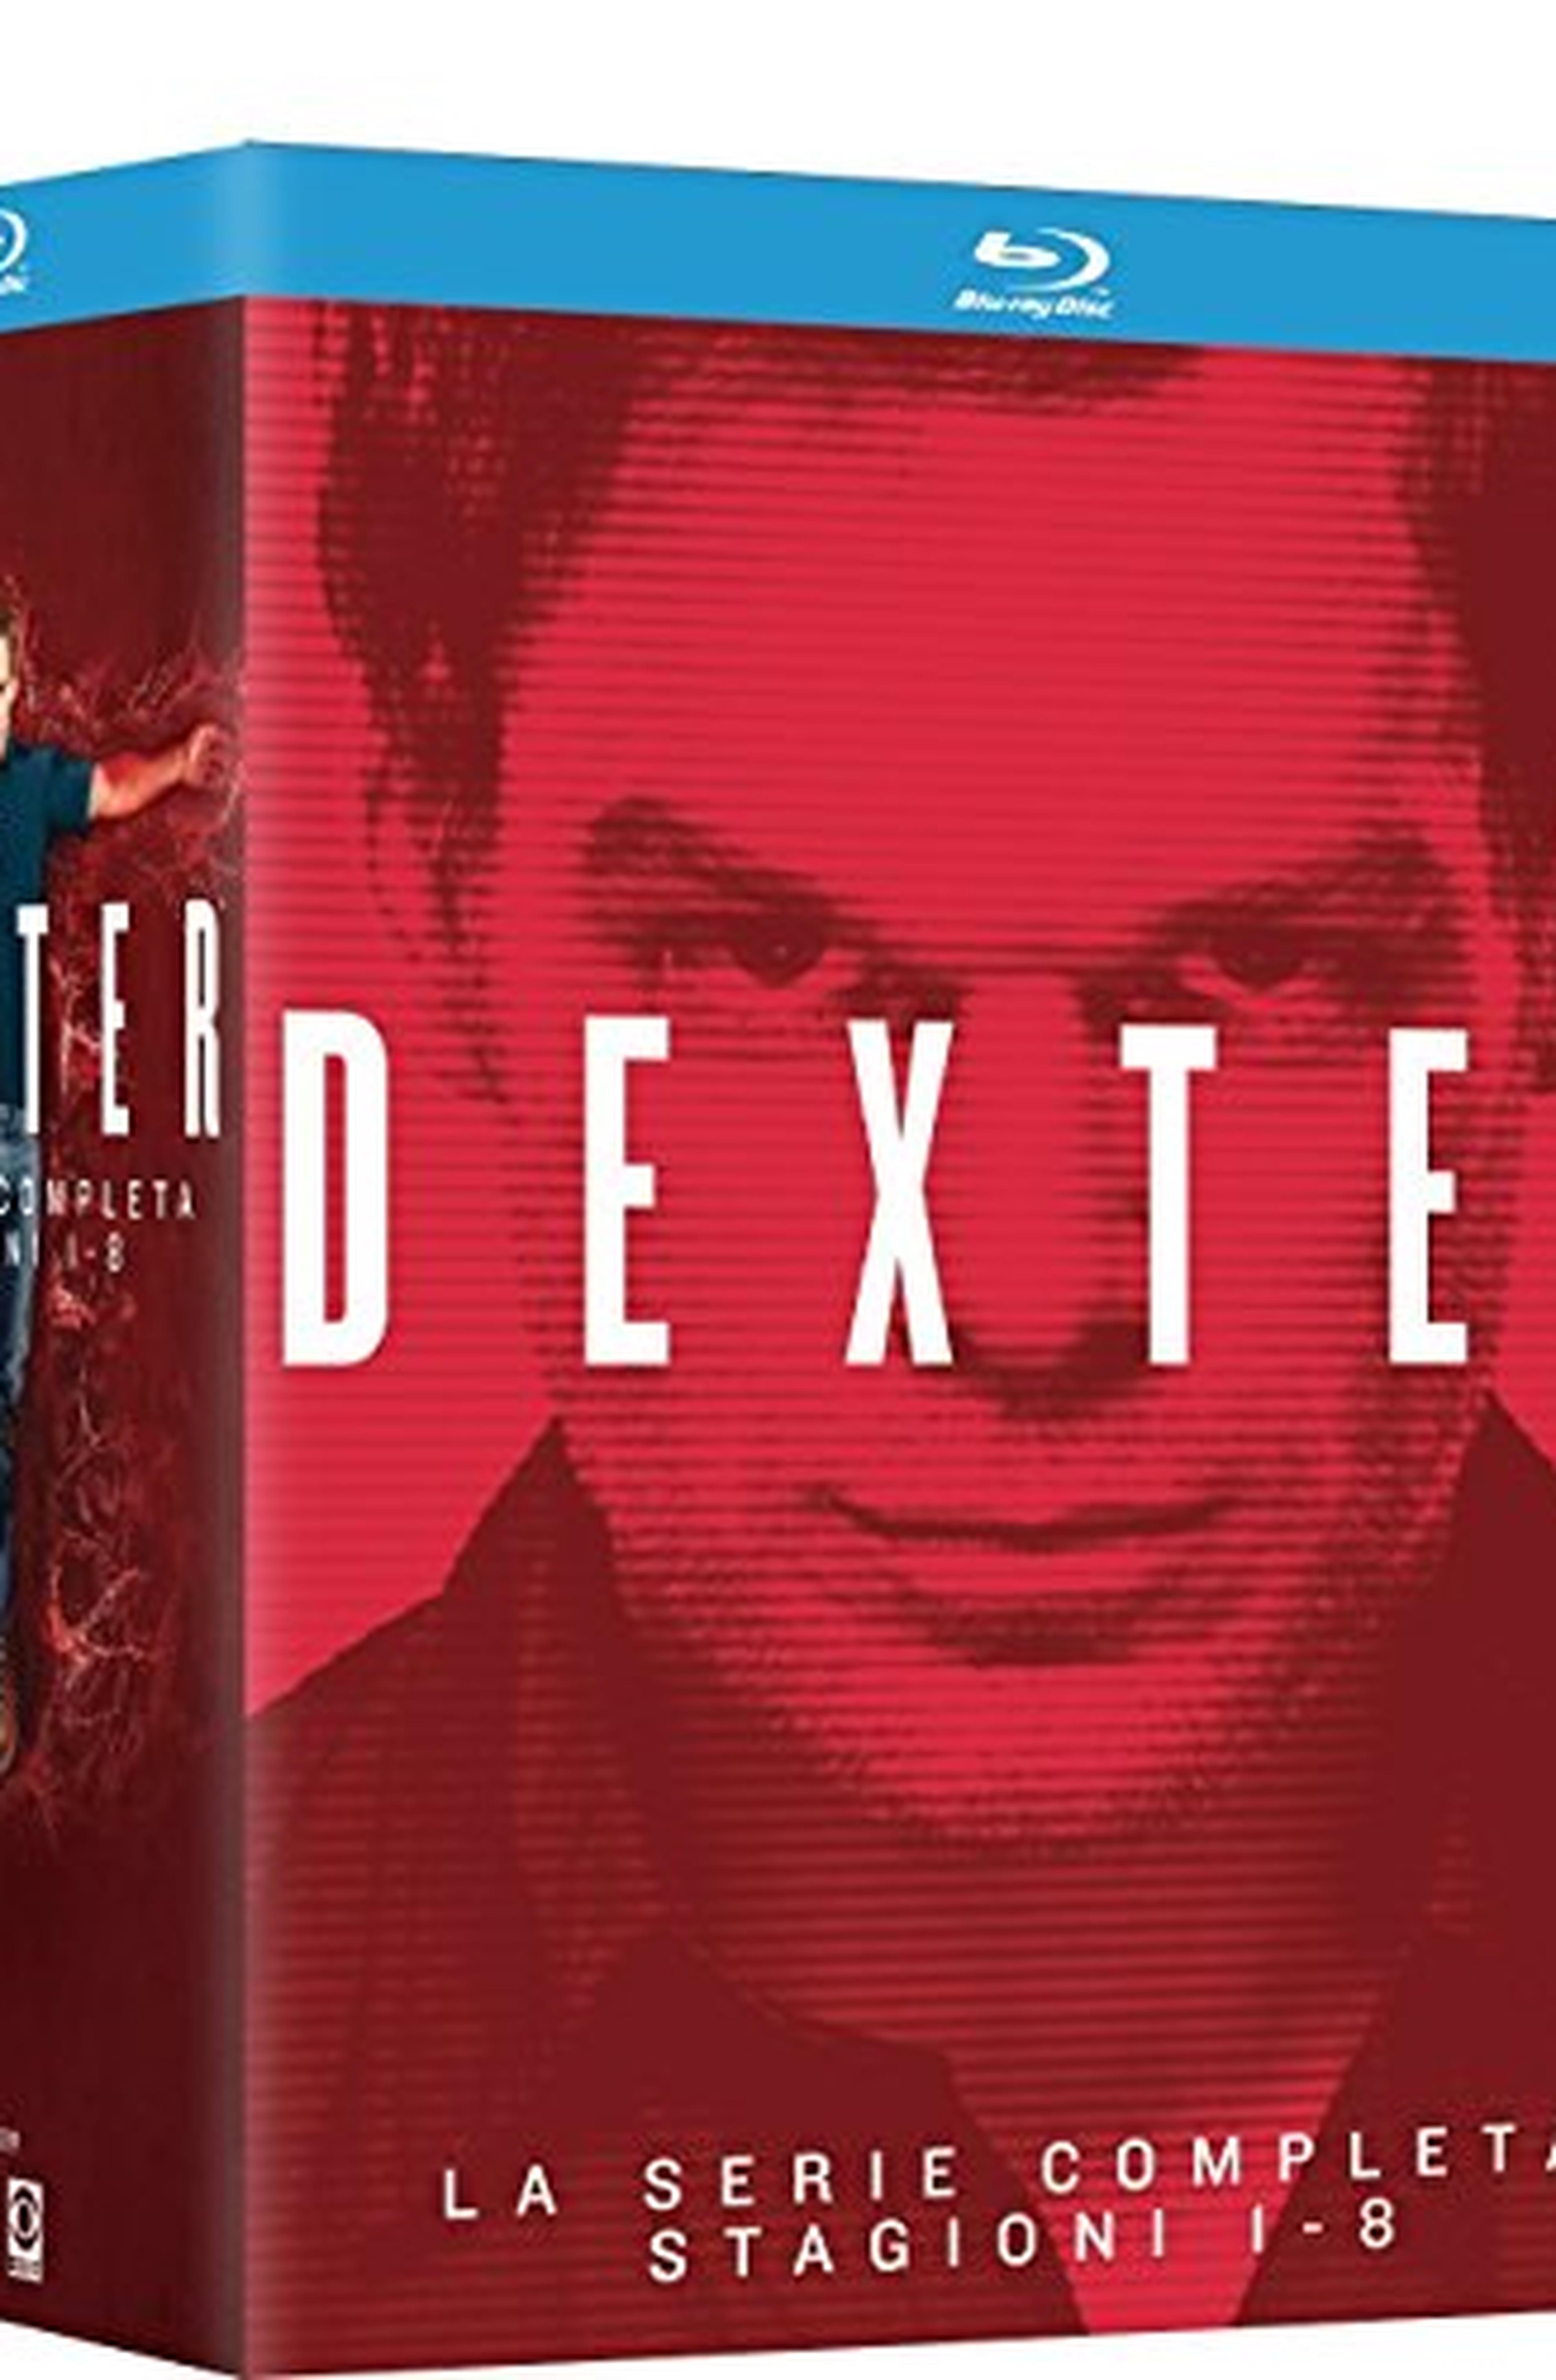 Dexter Stg. 1-8 (Serie Completa)